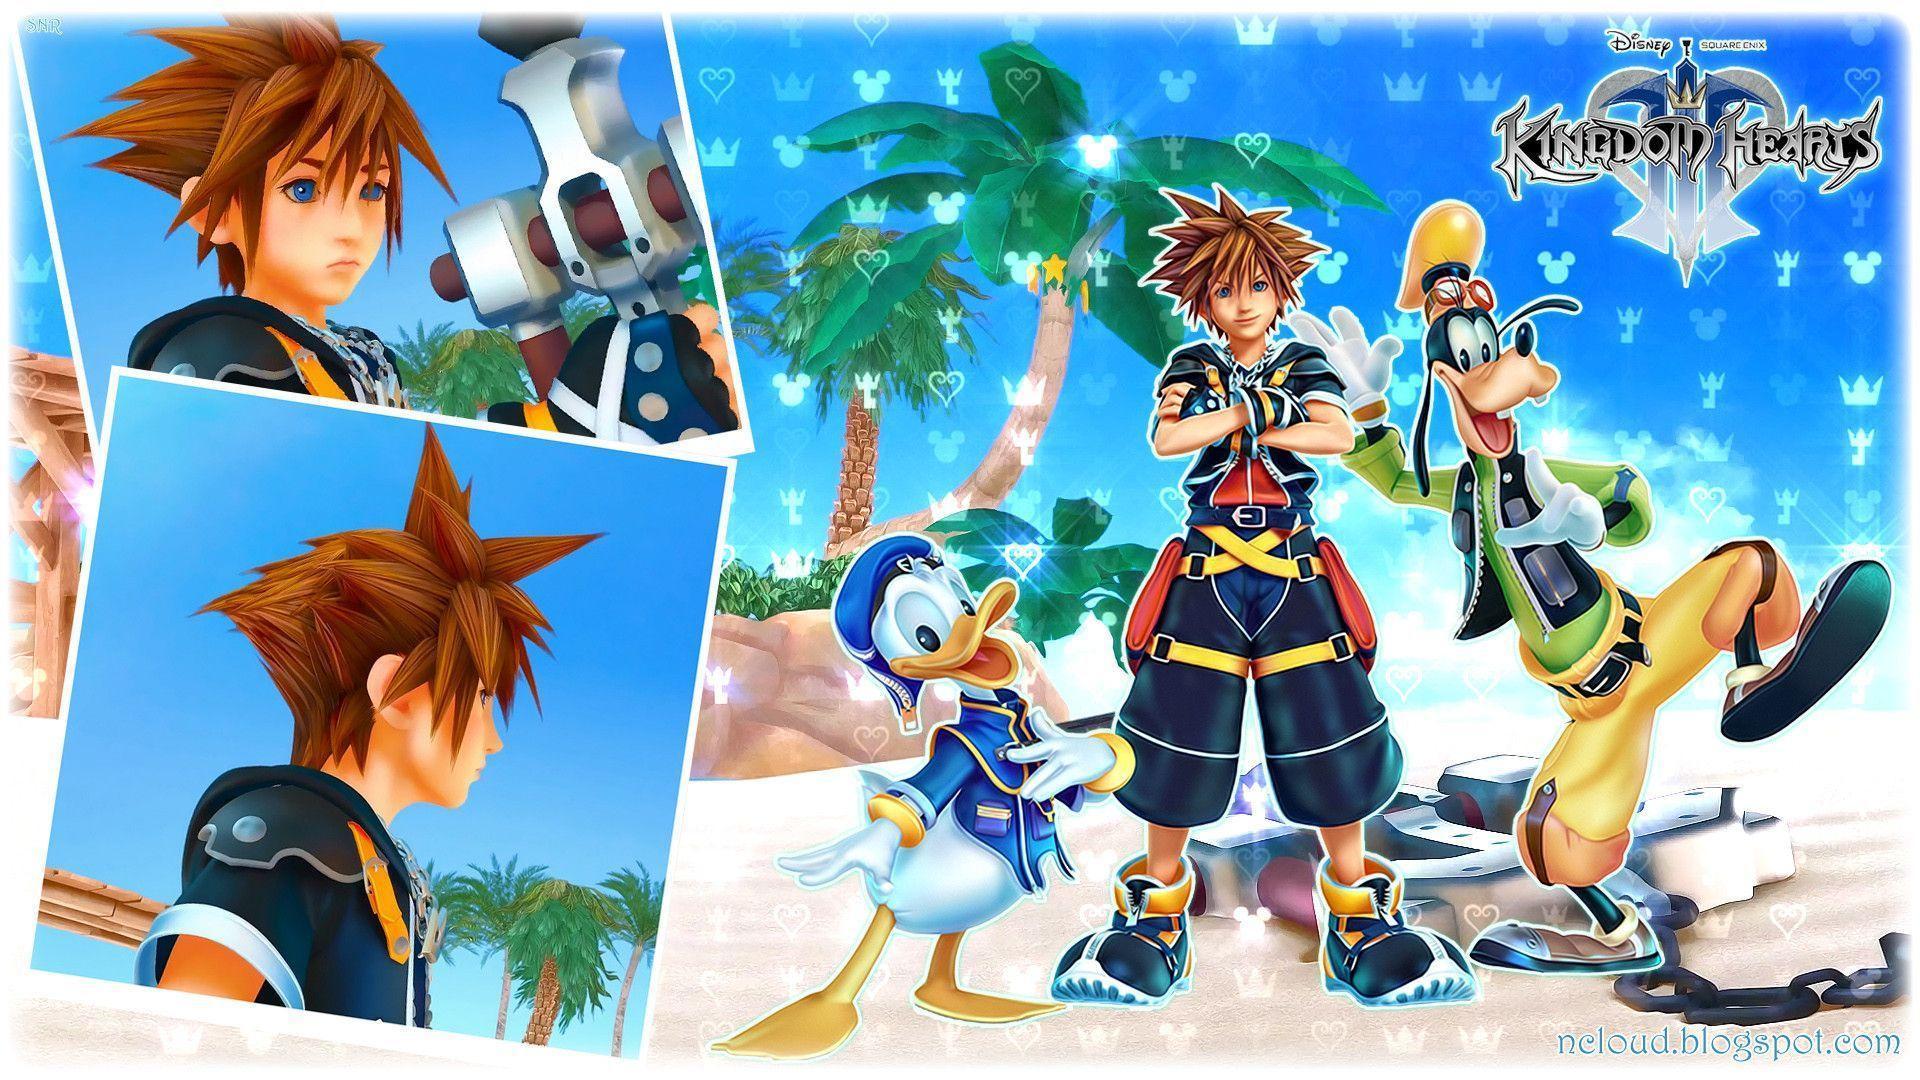 Games Movies Music Anime: My Kingdom Hearts 3 Wallpaper